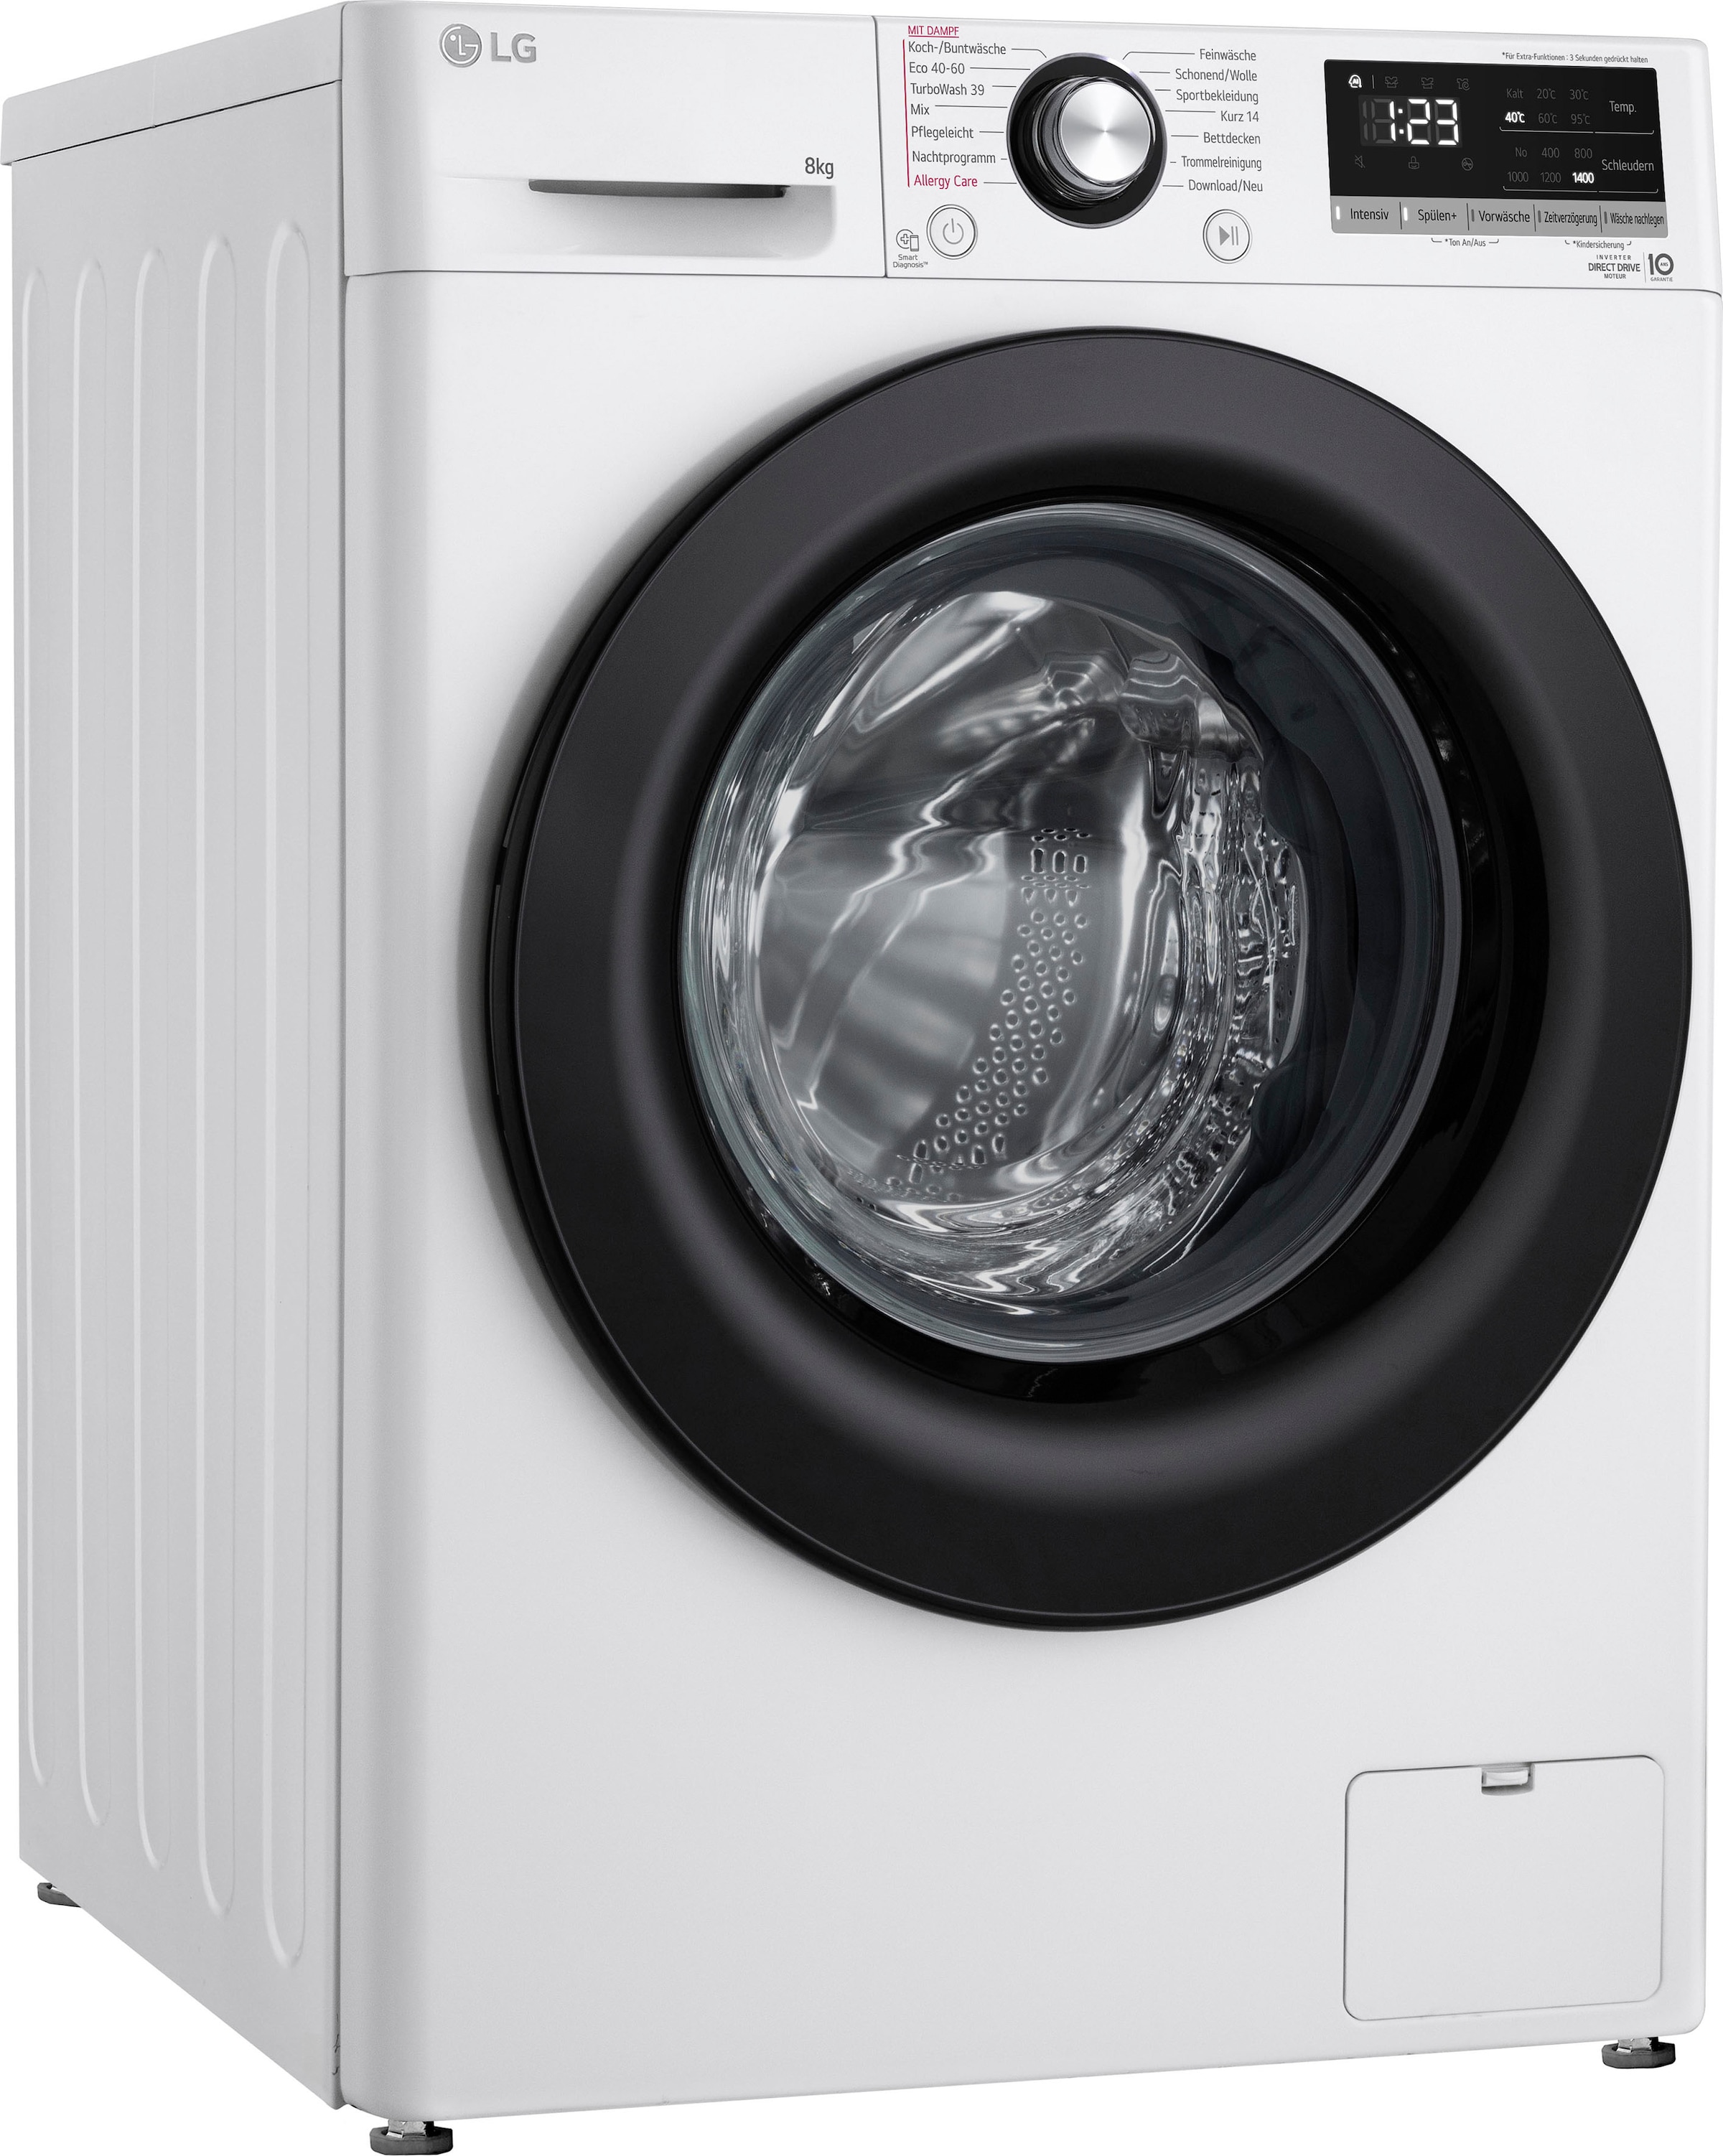 Waschmaschine LG 1400 kg, U/min 8 kaufen »F4WV4085«, F4WV4085,